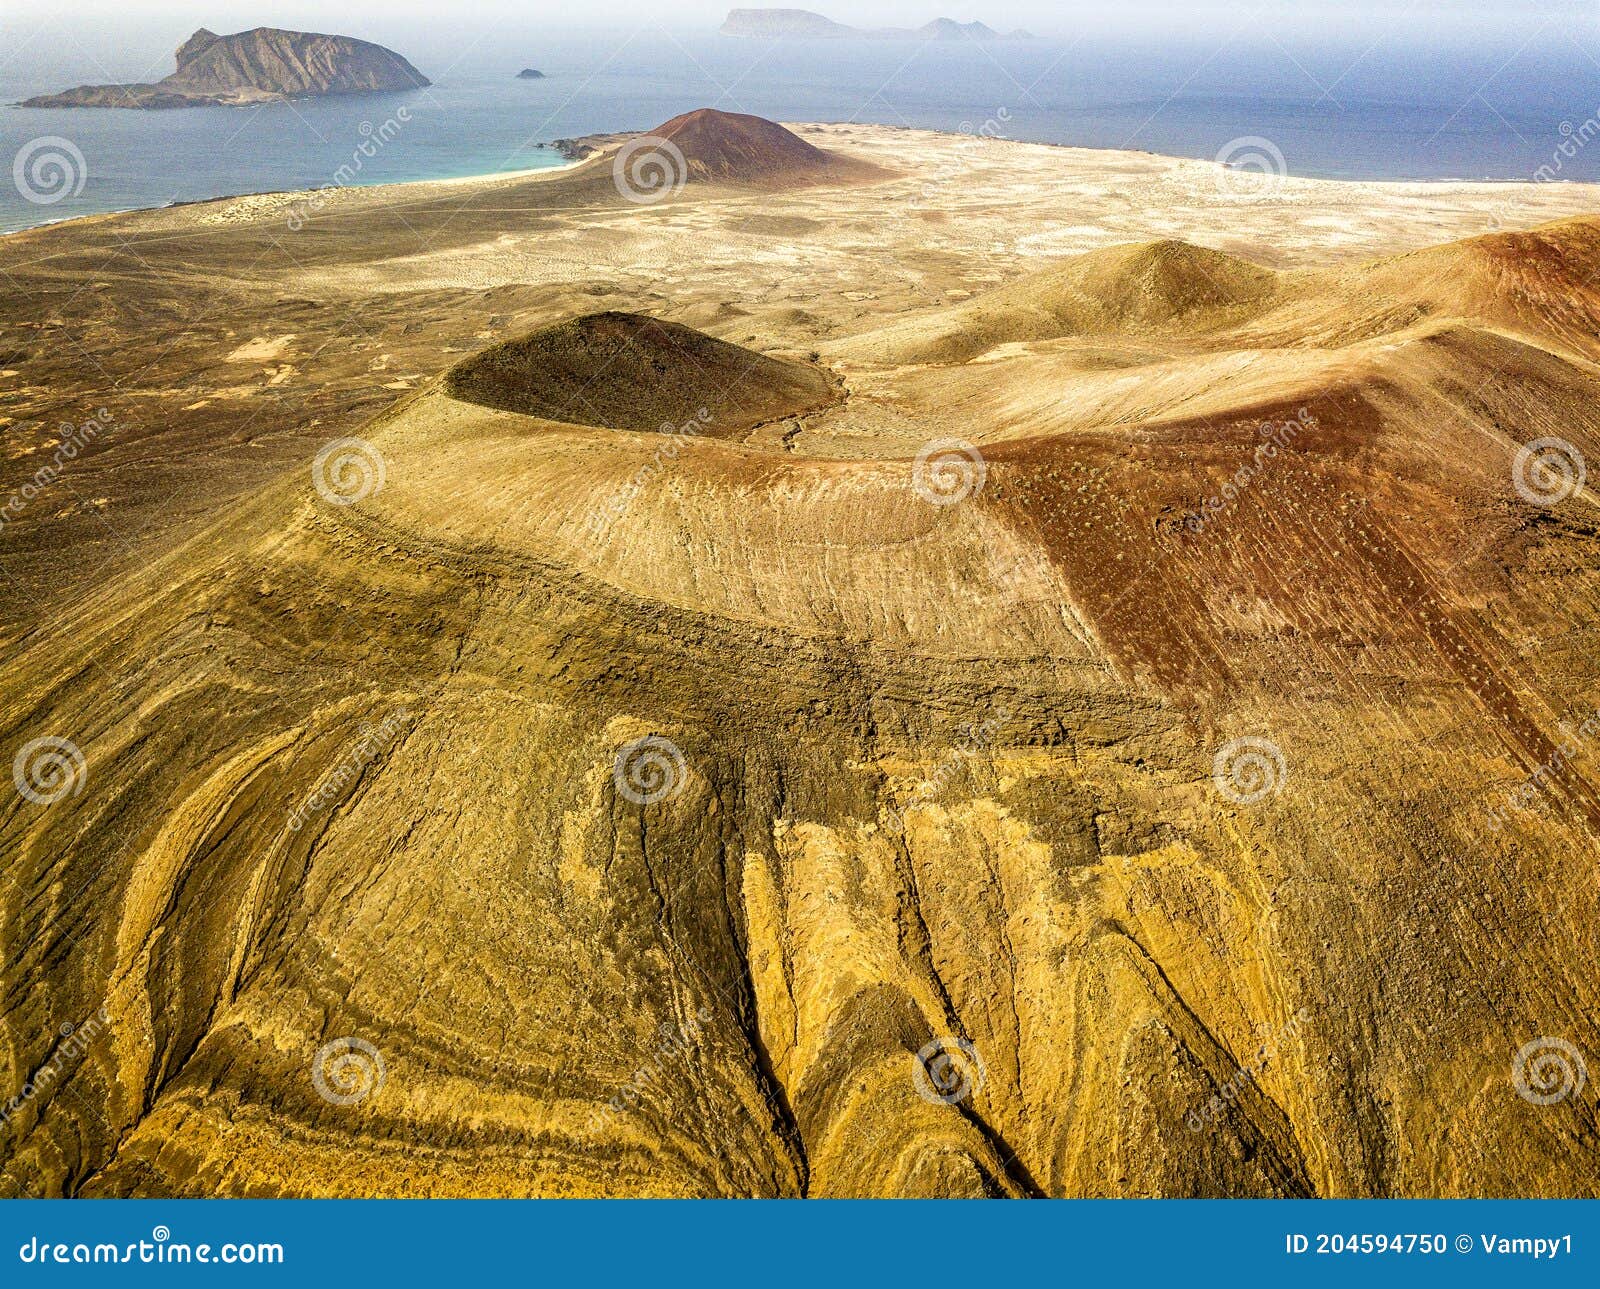 aerial view of chinijo archipelago of la graciosa, lanzarote, canary islands. spain. la aguja grande mountain